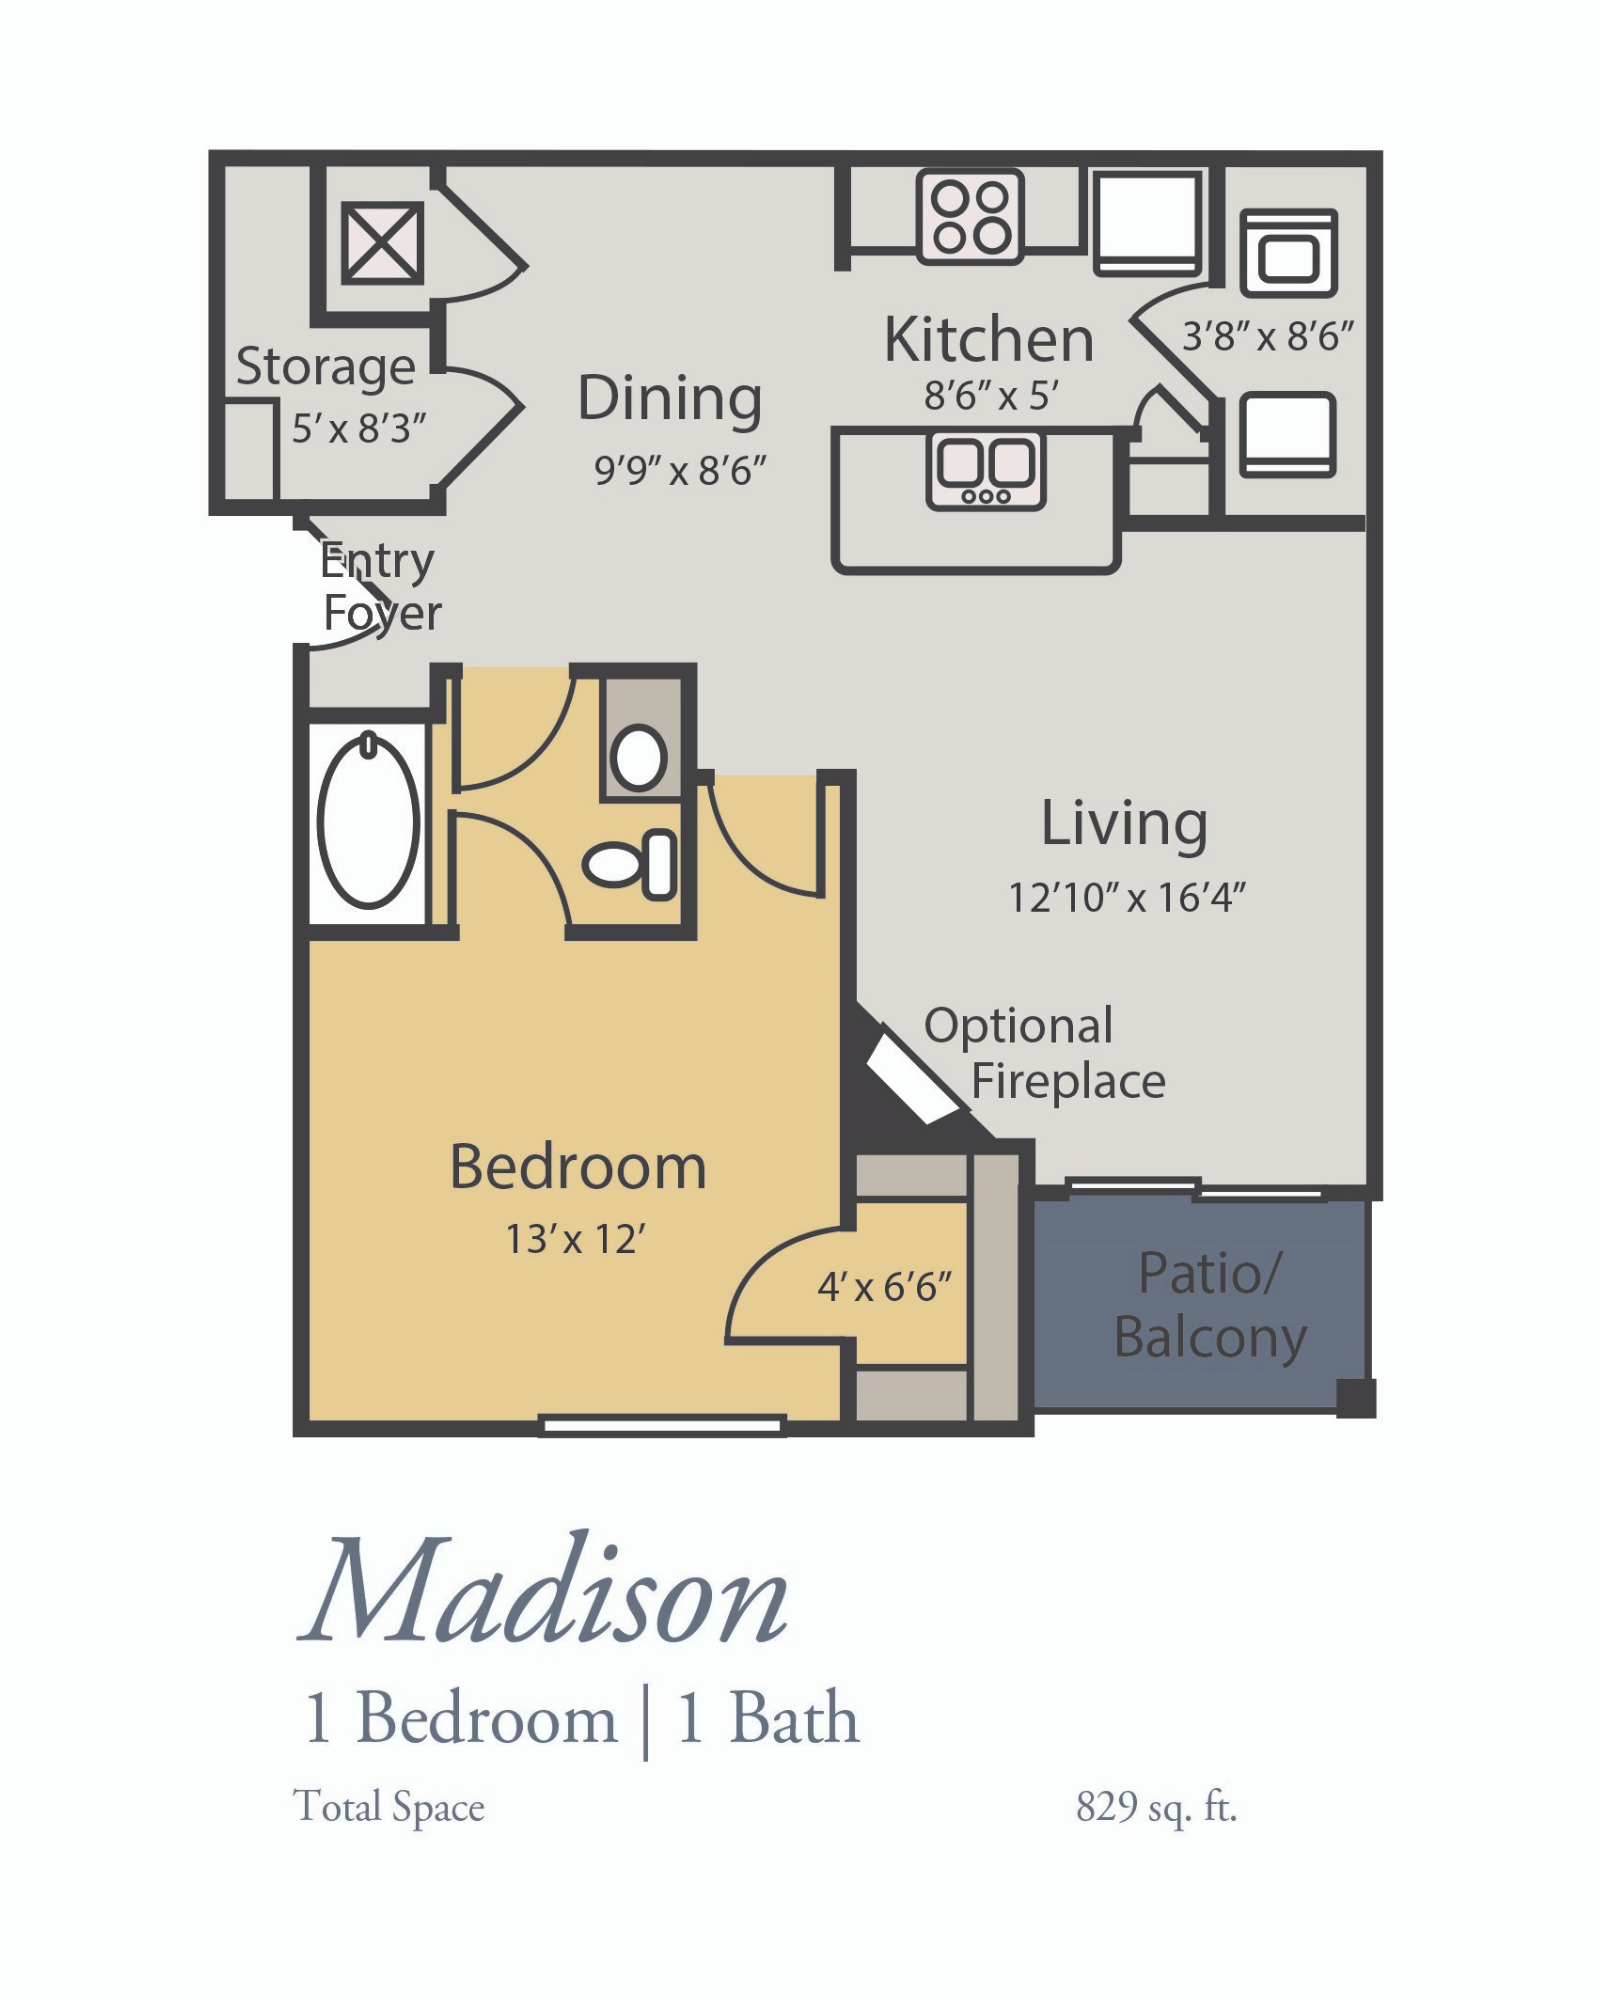 Madison Floor Plan, 1 Bedroom, 1 Bath